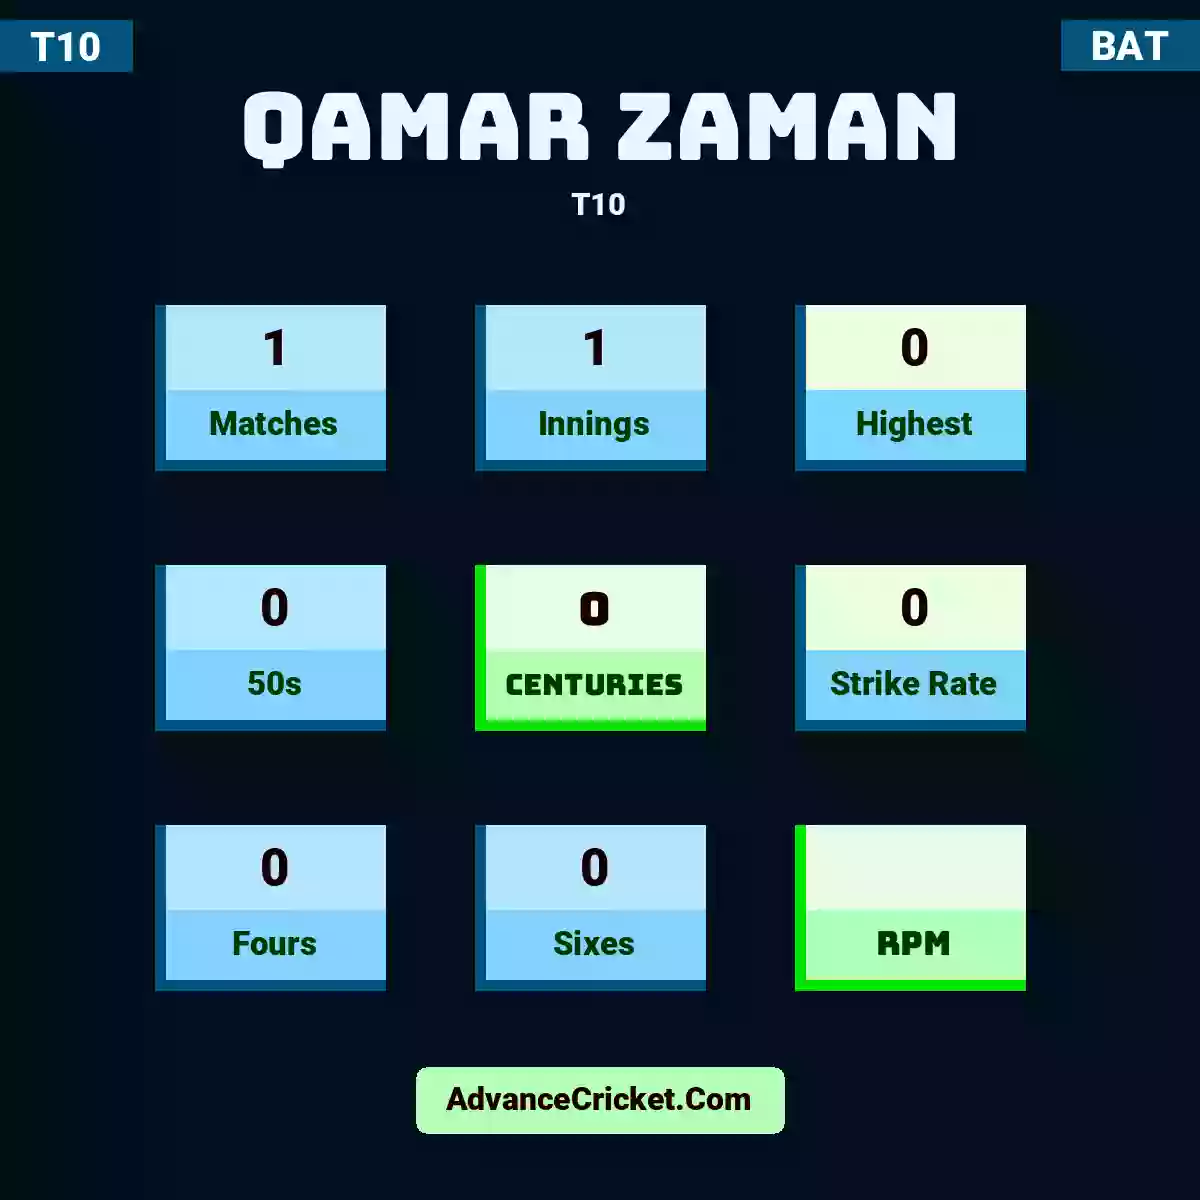 Qamar Zaman T10 , Qamar Zaman played 1 matches, scored 0 runs as highest, 0 half-centuries, and 0 centuries, with a strike rate of 0. Q.Zaman hit 0 fours and 0 sixes.